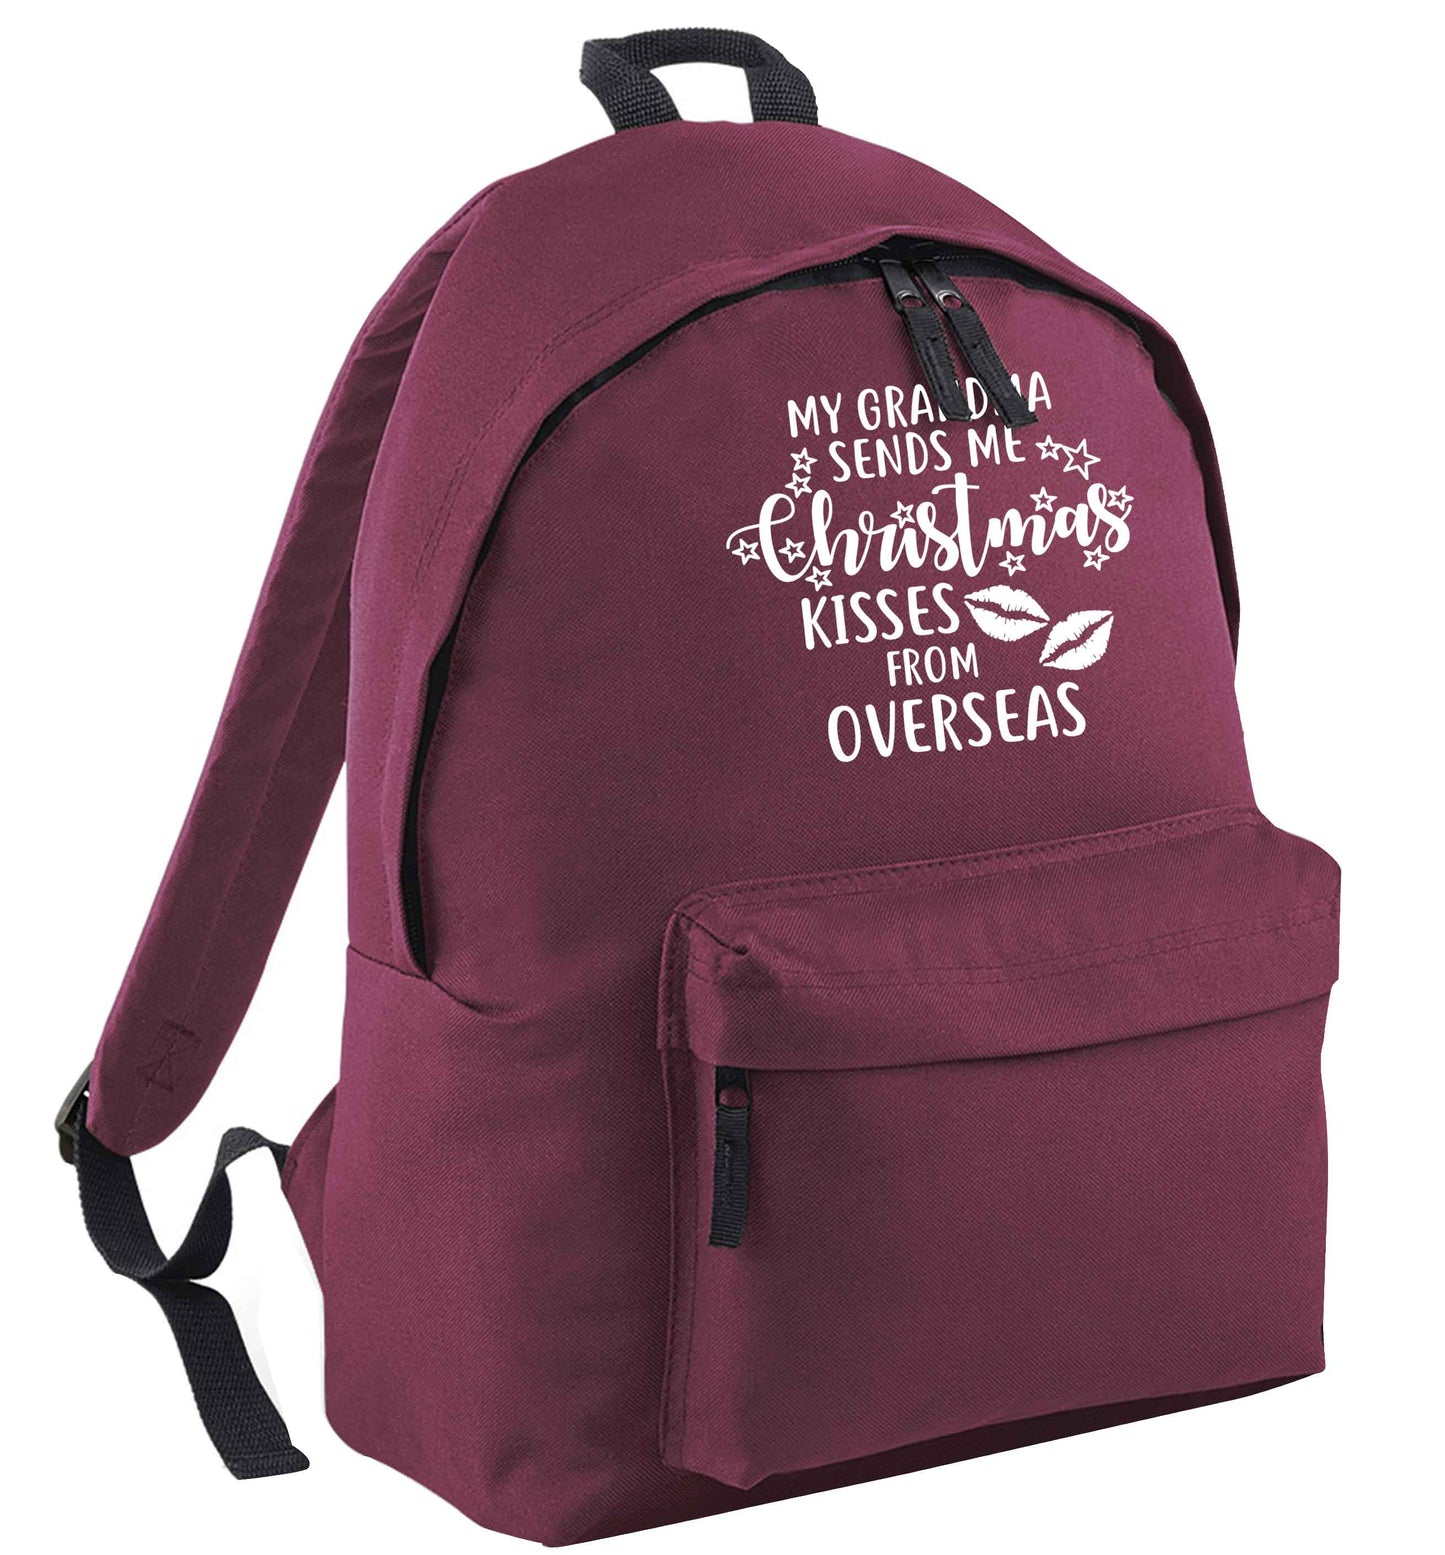 Grandma Christmas Kisses Overseas maroon adults backpack